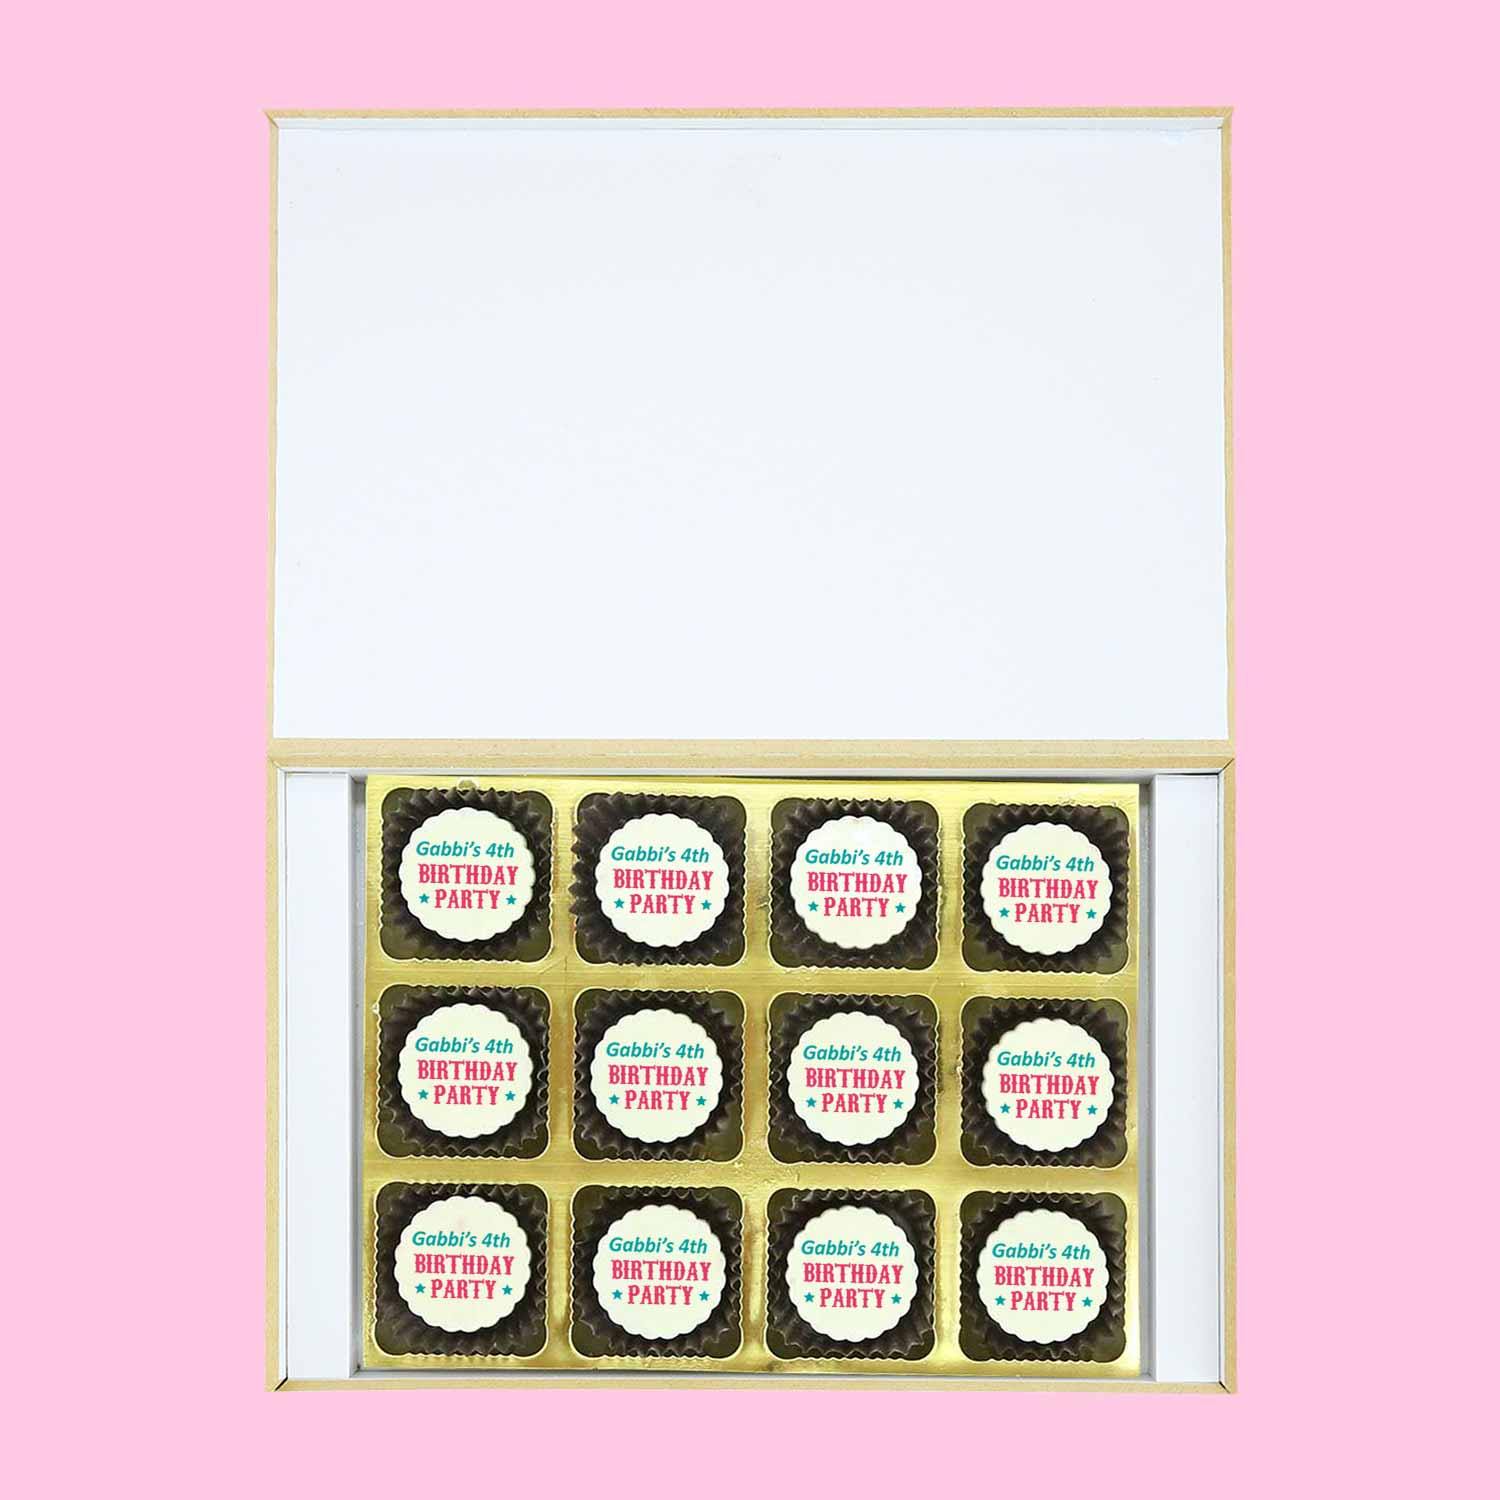 Candies & Toffees birthday personalised invitation - Choco ManualART